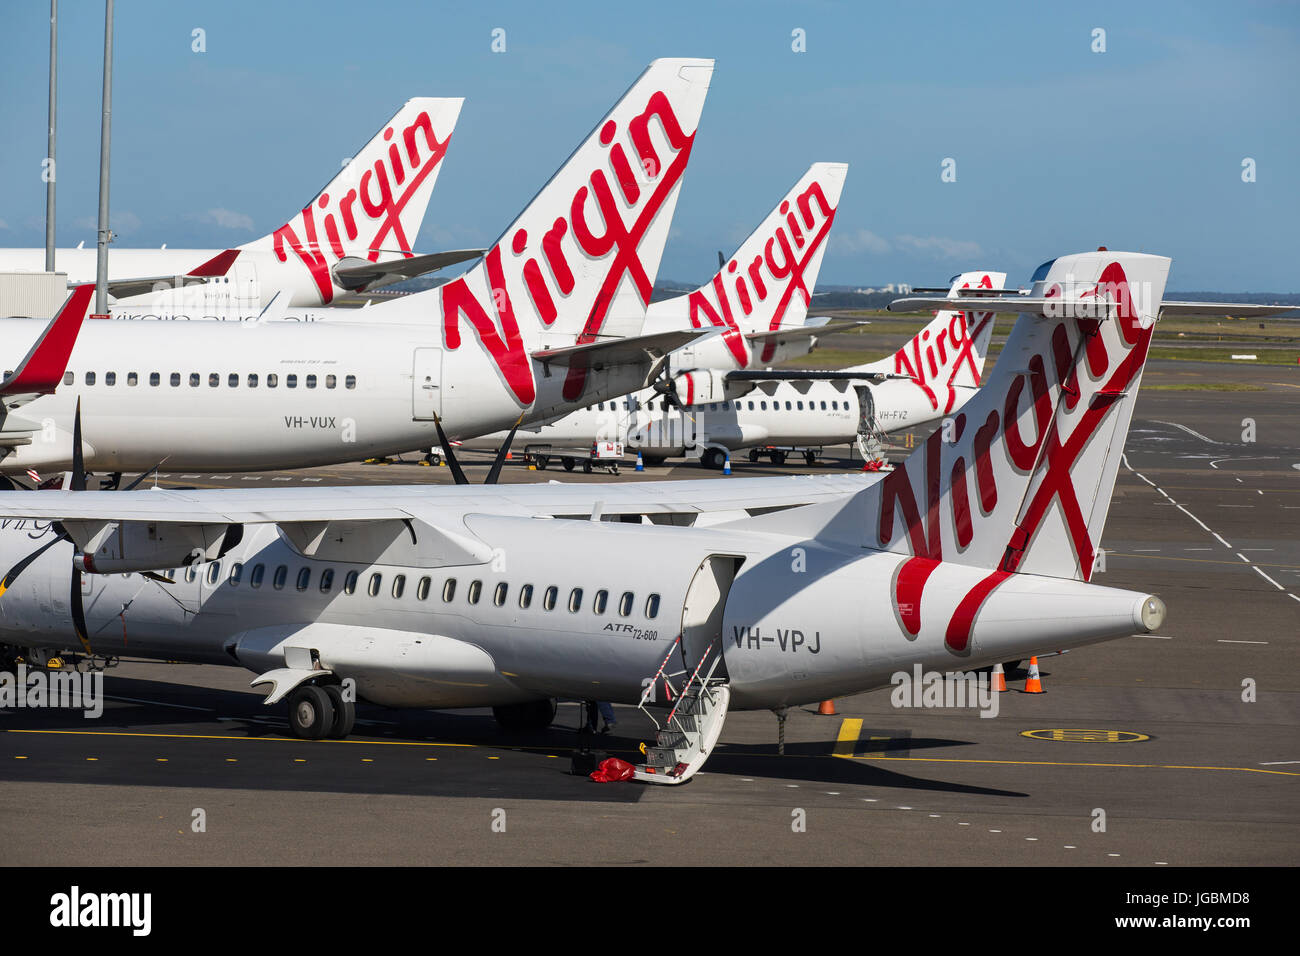 A group of Virgin Australlia Jets awaiting passengers at Melbourne Tullamarine Airport Stock Photo